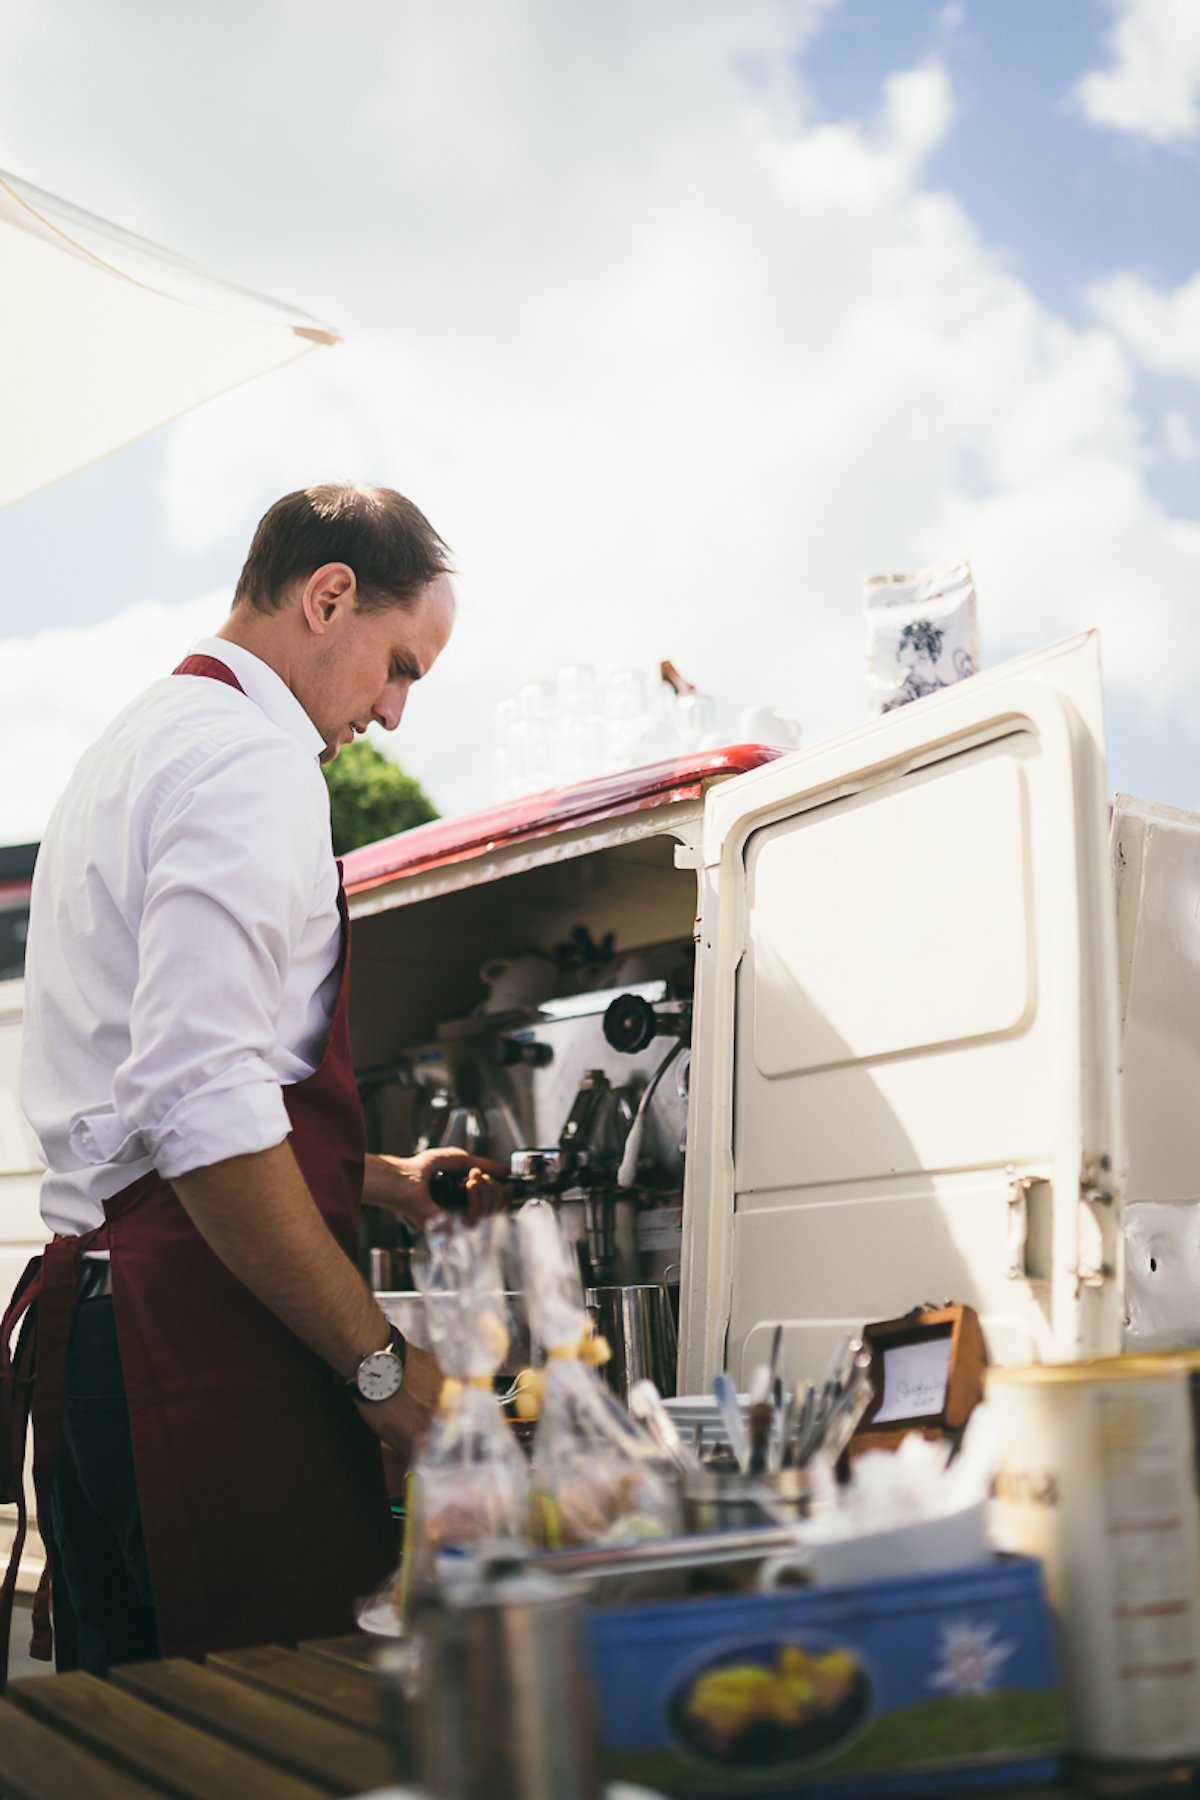 Avd Oldtimer Grand Prix 2016 AvD Oldtimer GP Appecino Espresso Prosecco Kaffee Bar Stand Maschine Barista Kaffeemaschine